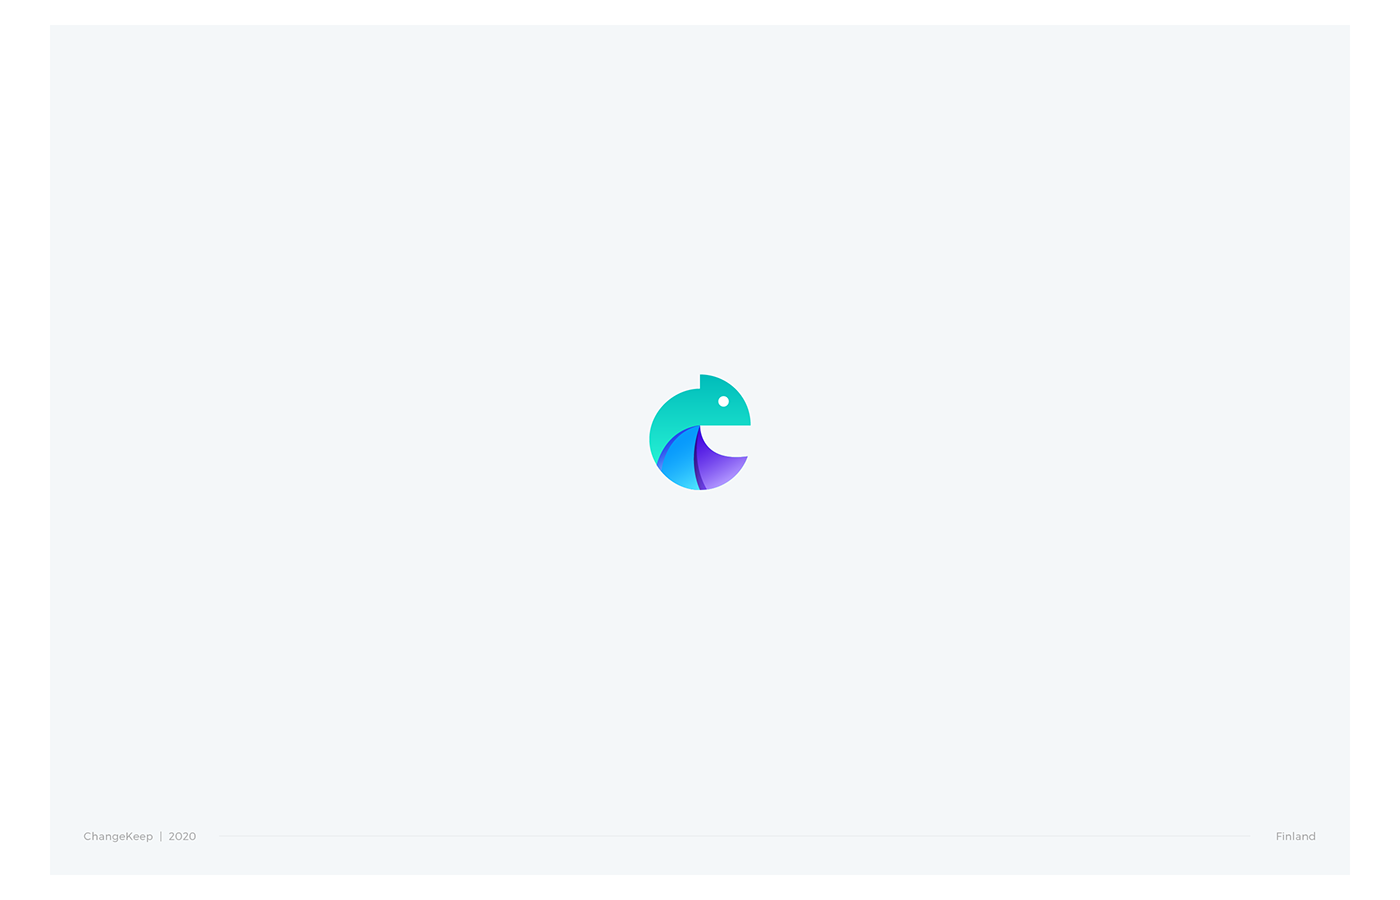 Colorful, geometric chameleon logo mark.